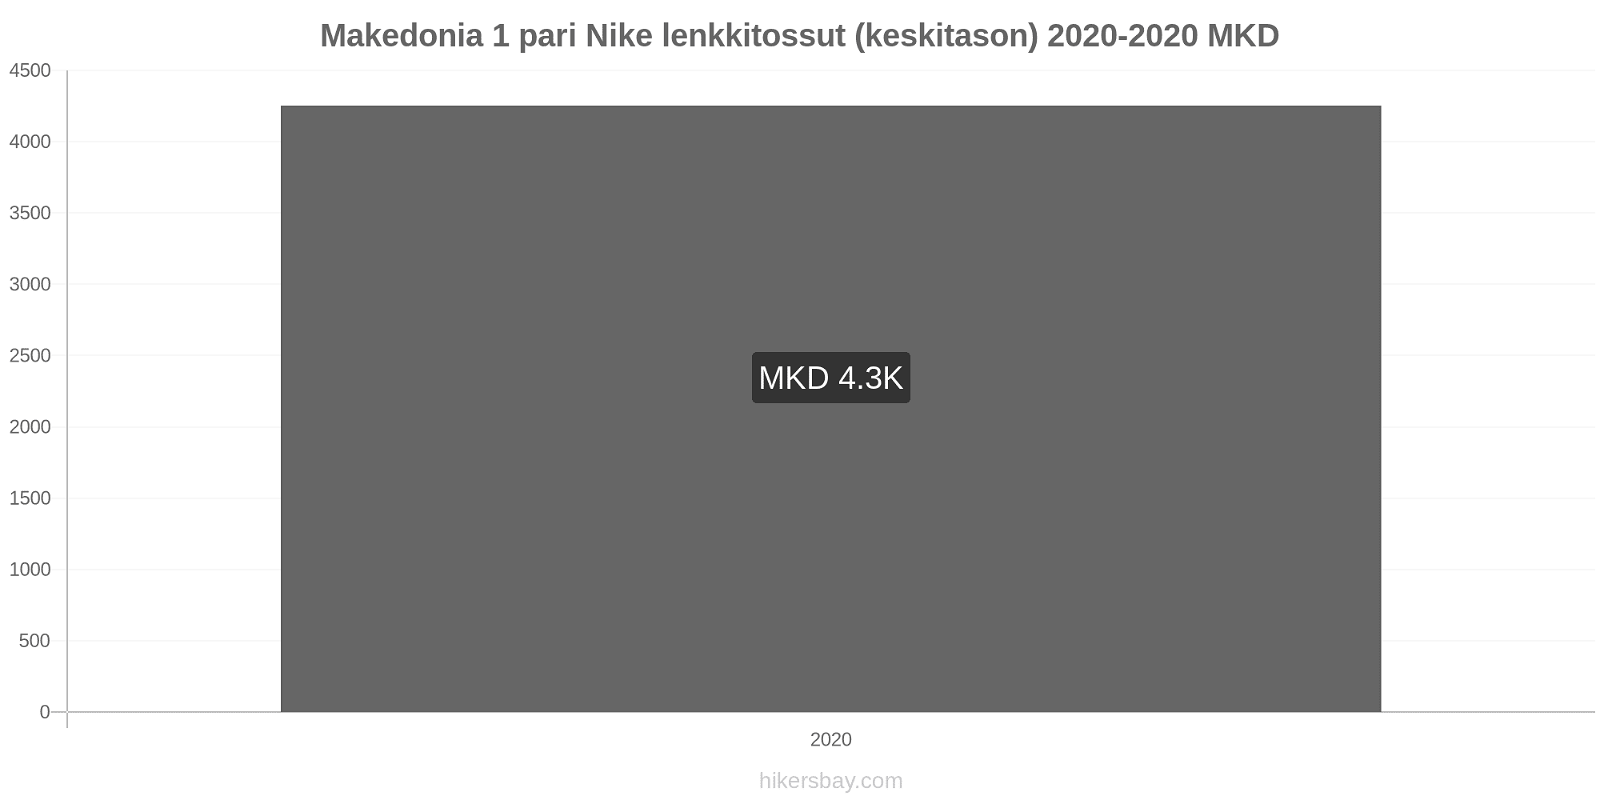 Makedonia hintojen muutokset 1 pari Nike lenkkitossut (keskitason) hikersbay.com